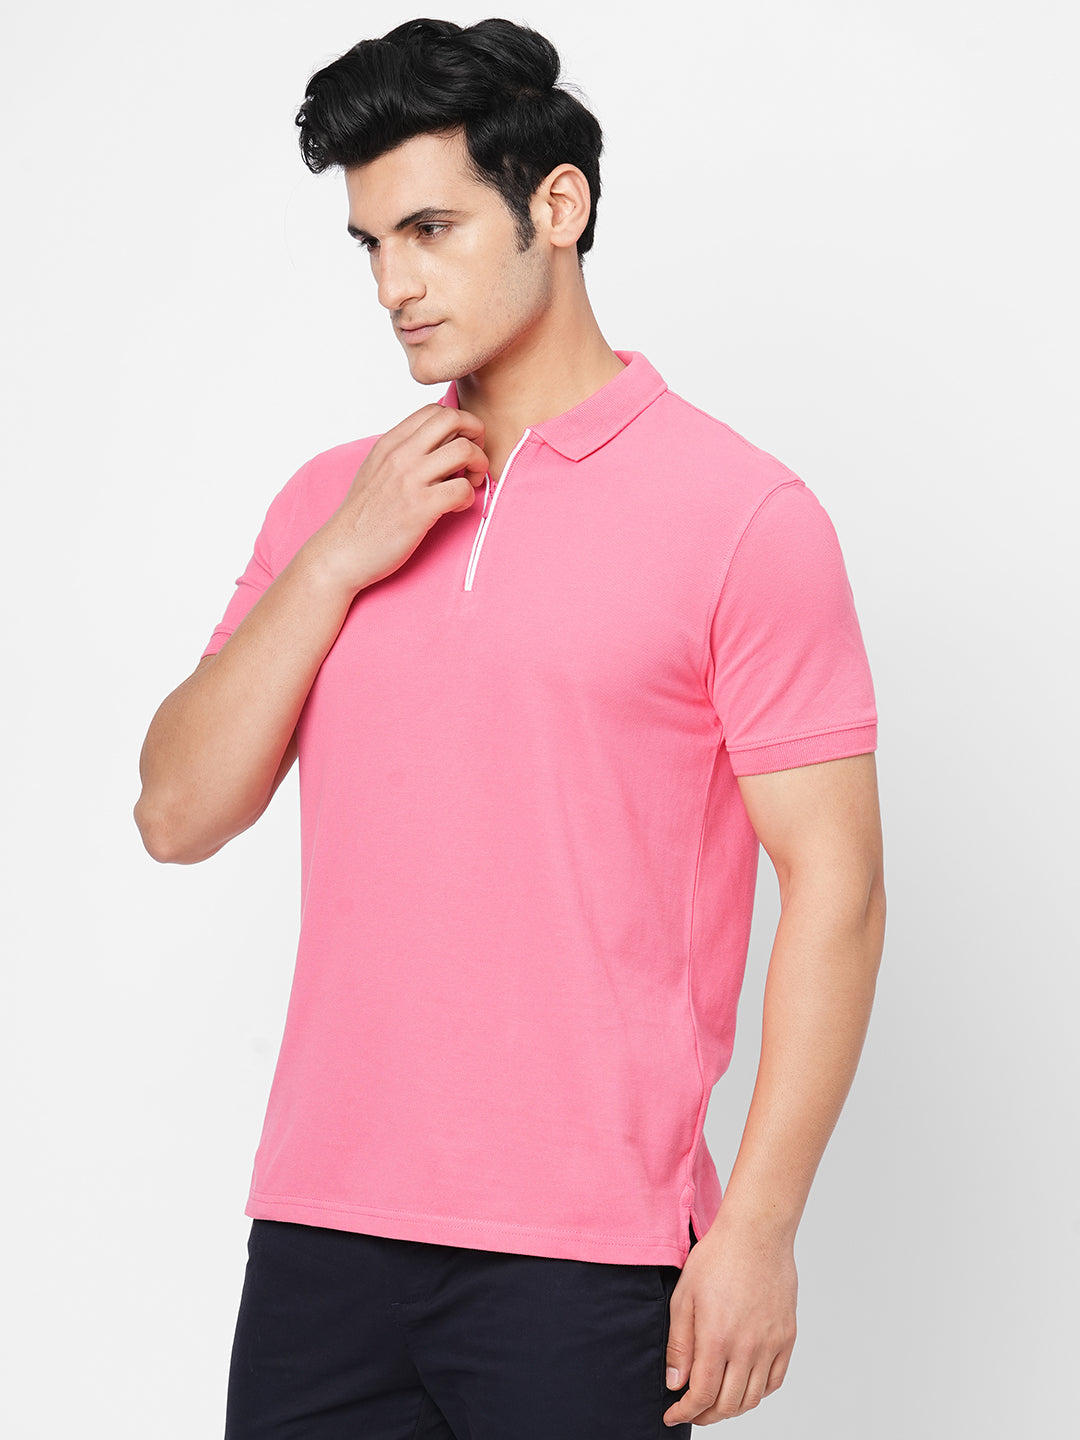 Men's Cotton Pink Regular Fit Tshirt